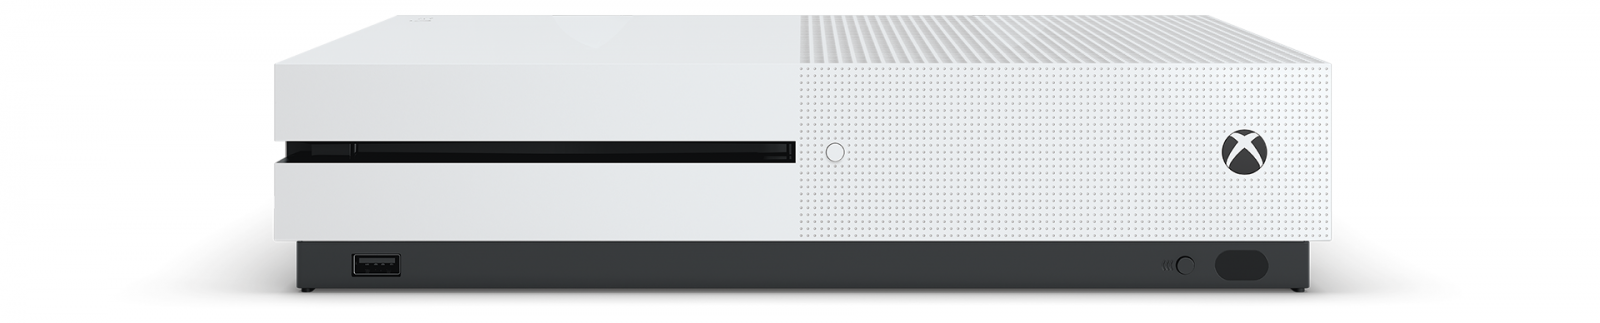 Xbox One S 2TB + FIFA 17 image1